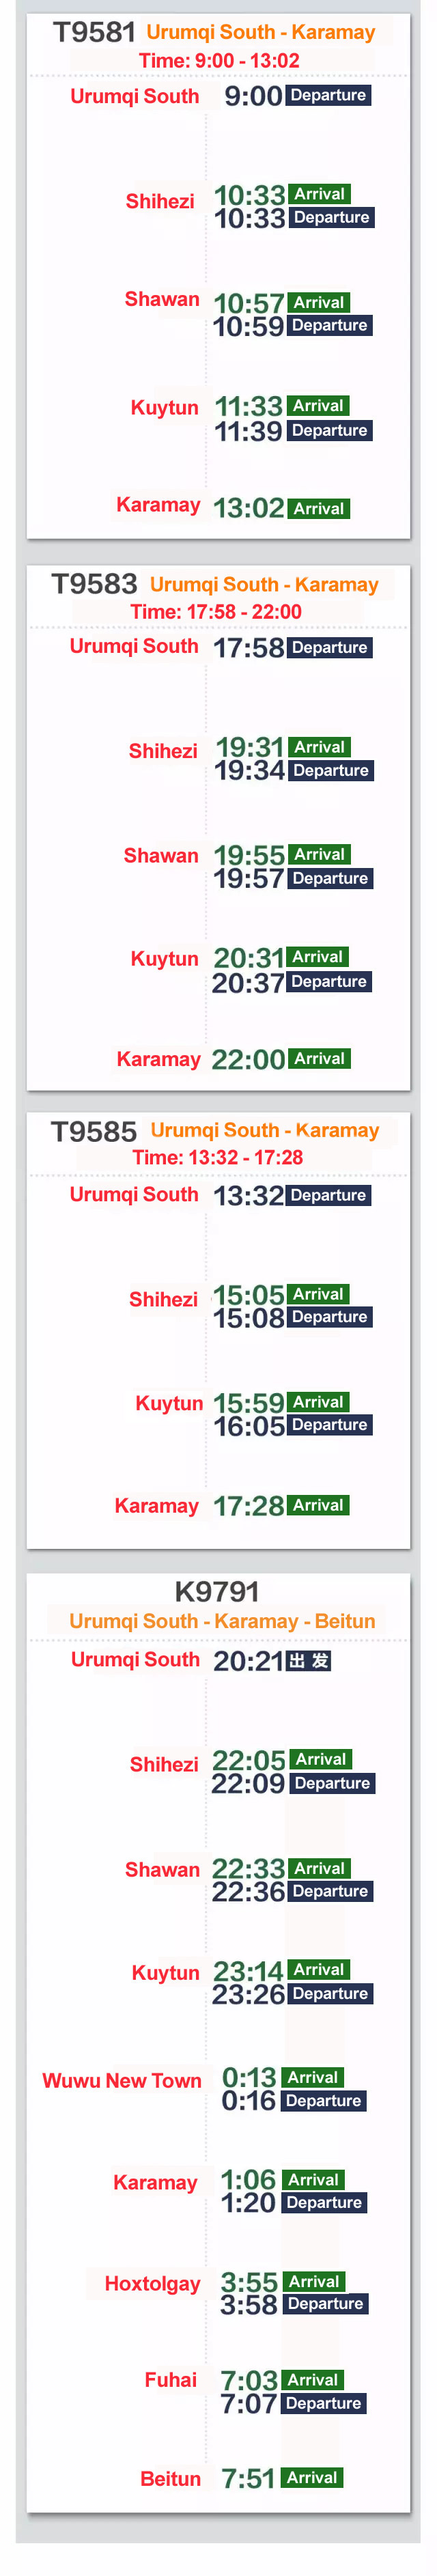 Karamay train schedule